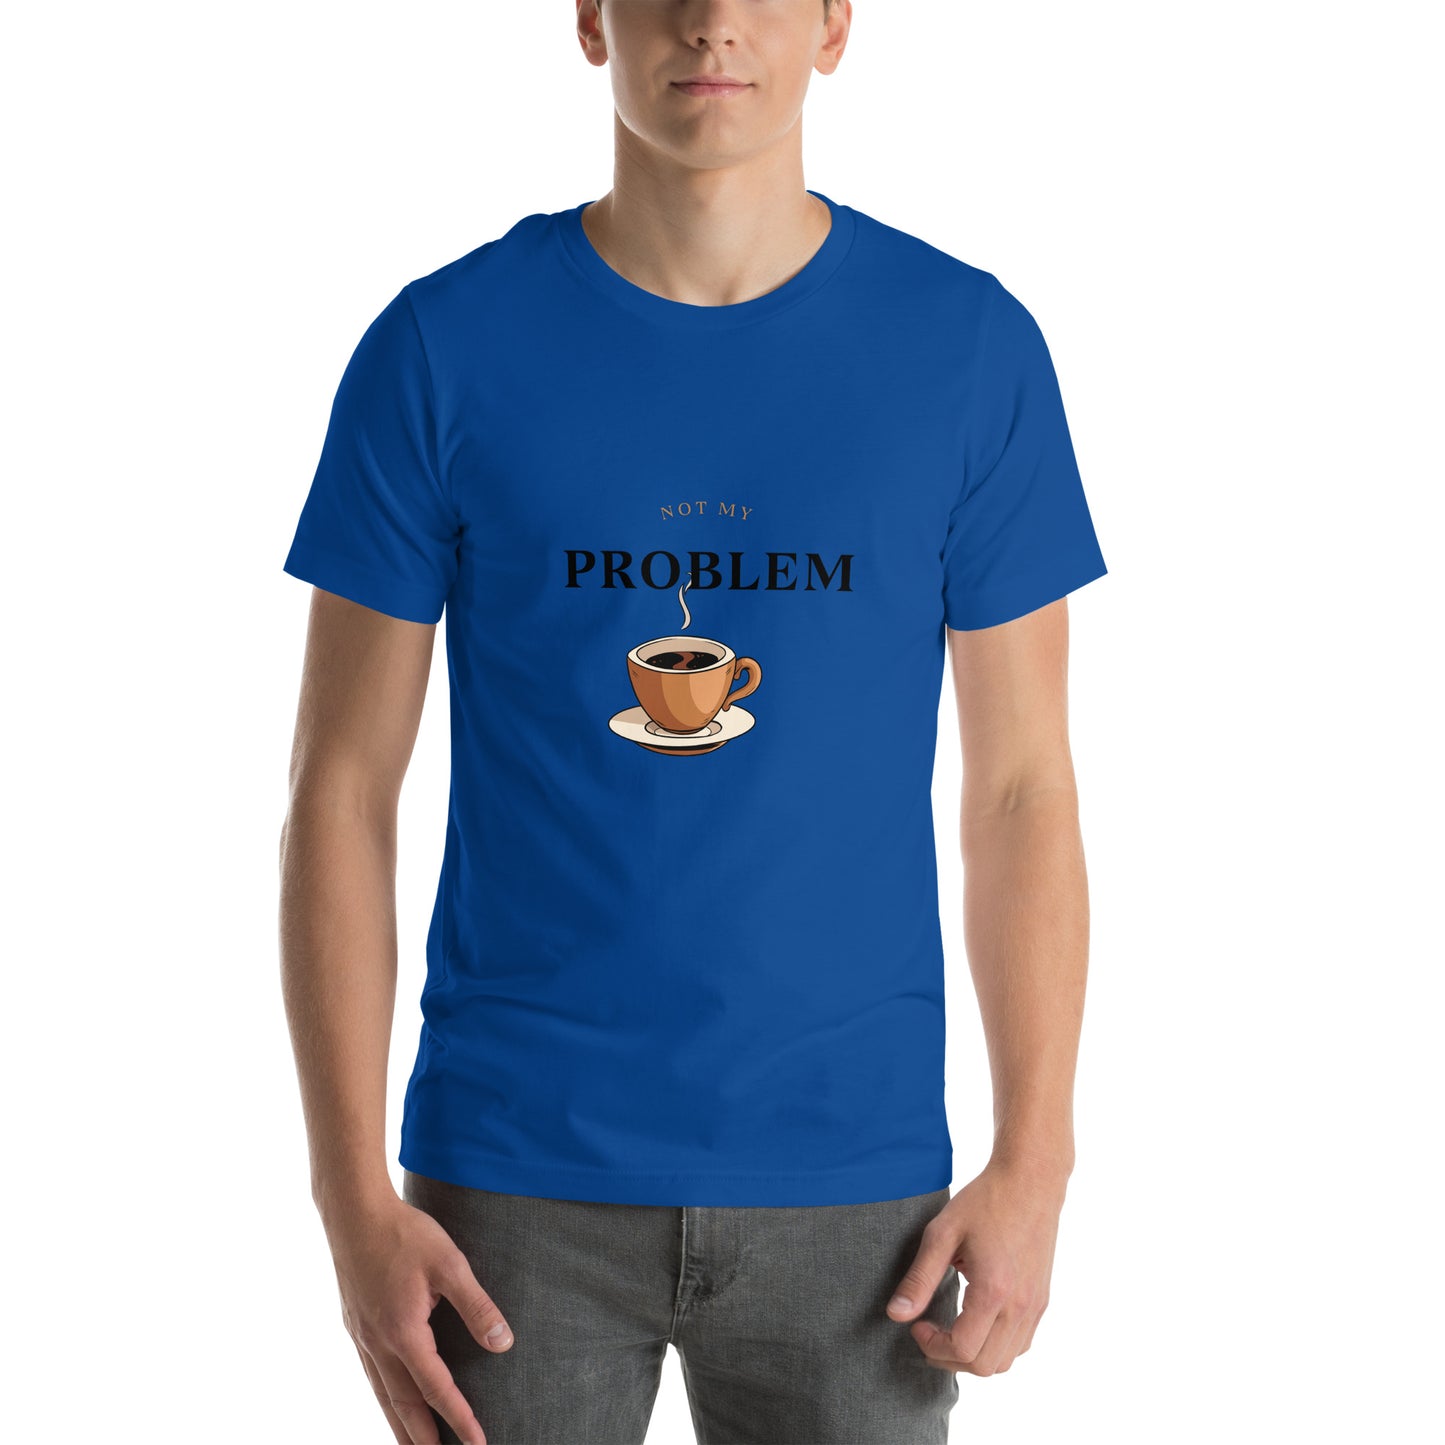 A problem-free Unisex t-shirt